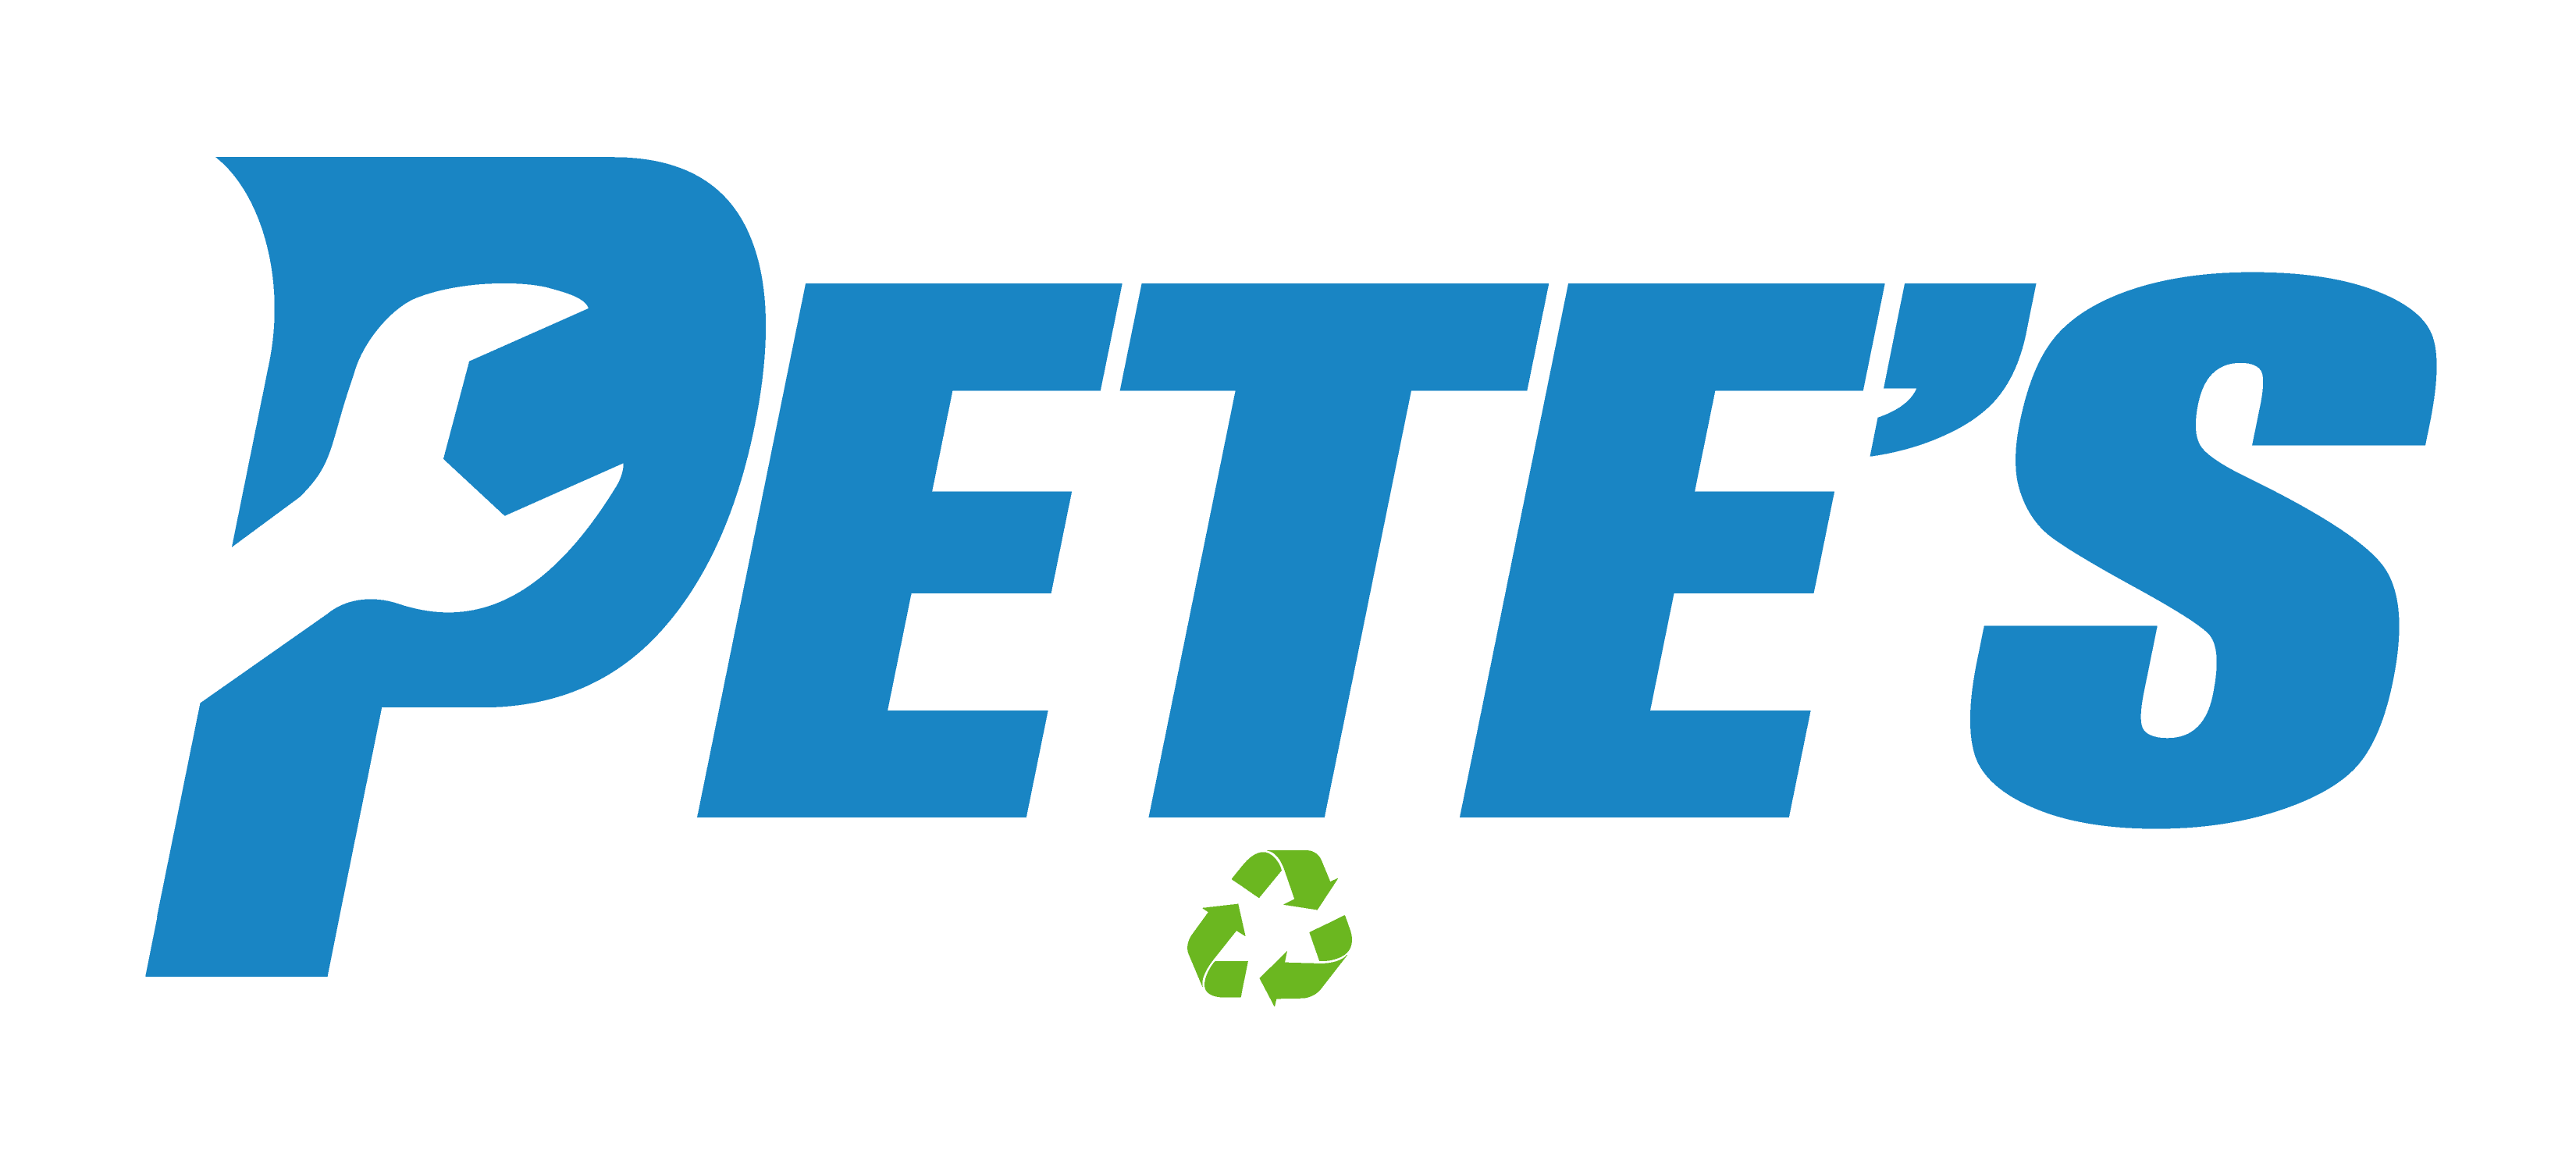 teal petes auto parts logo